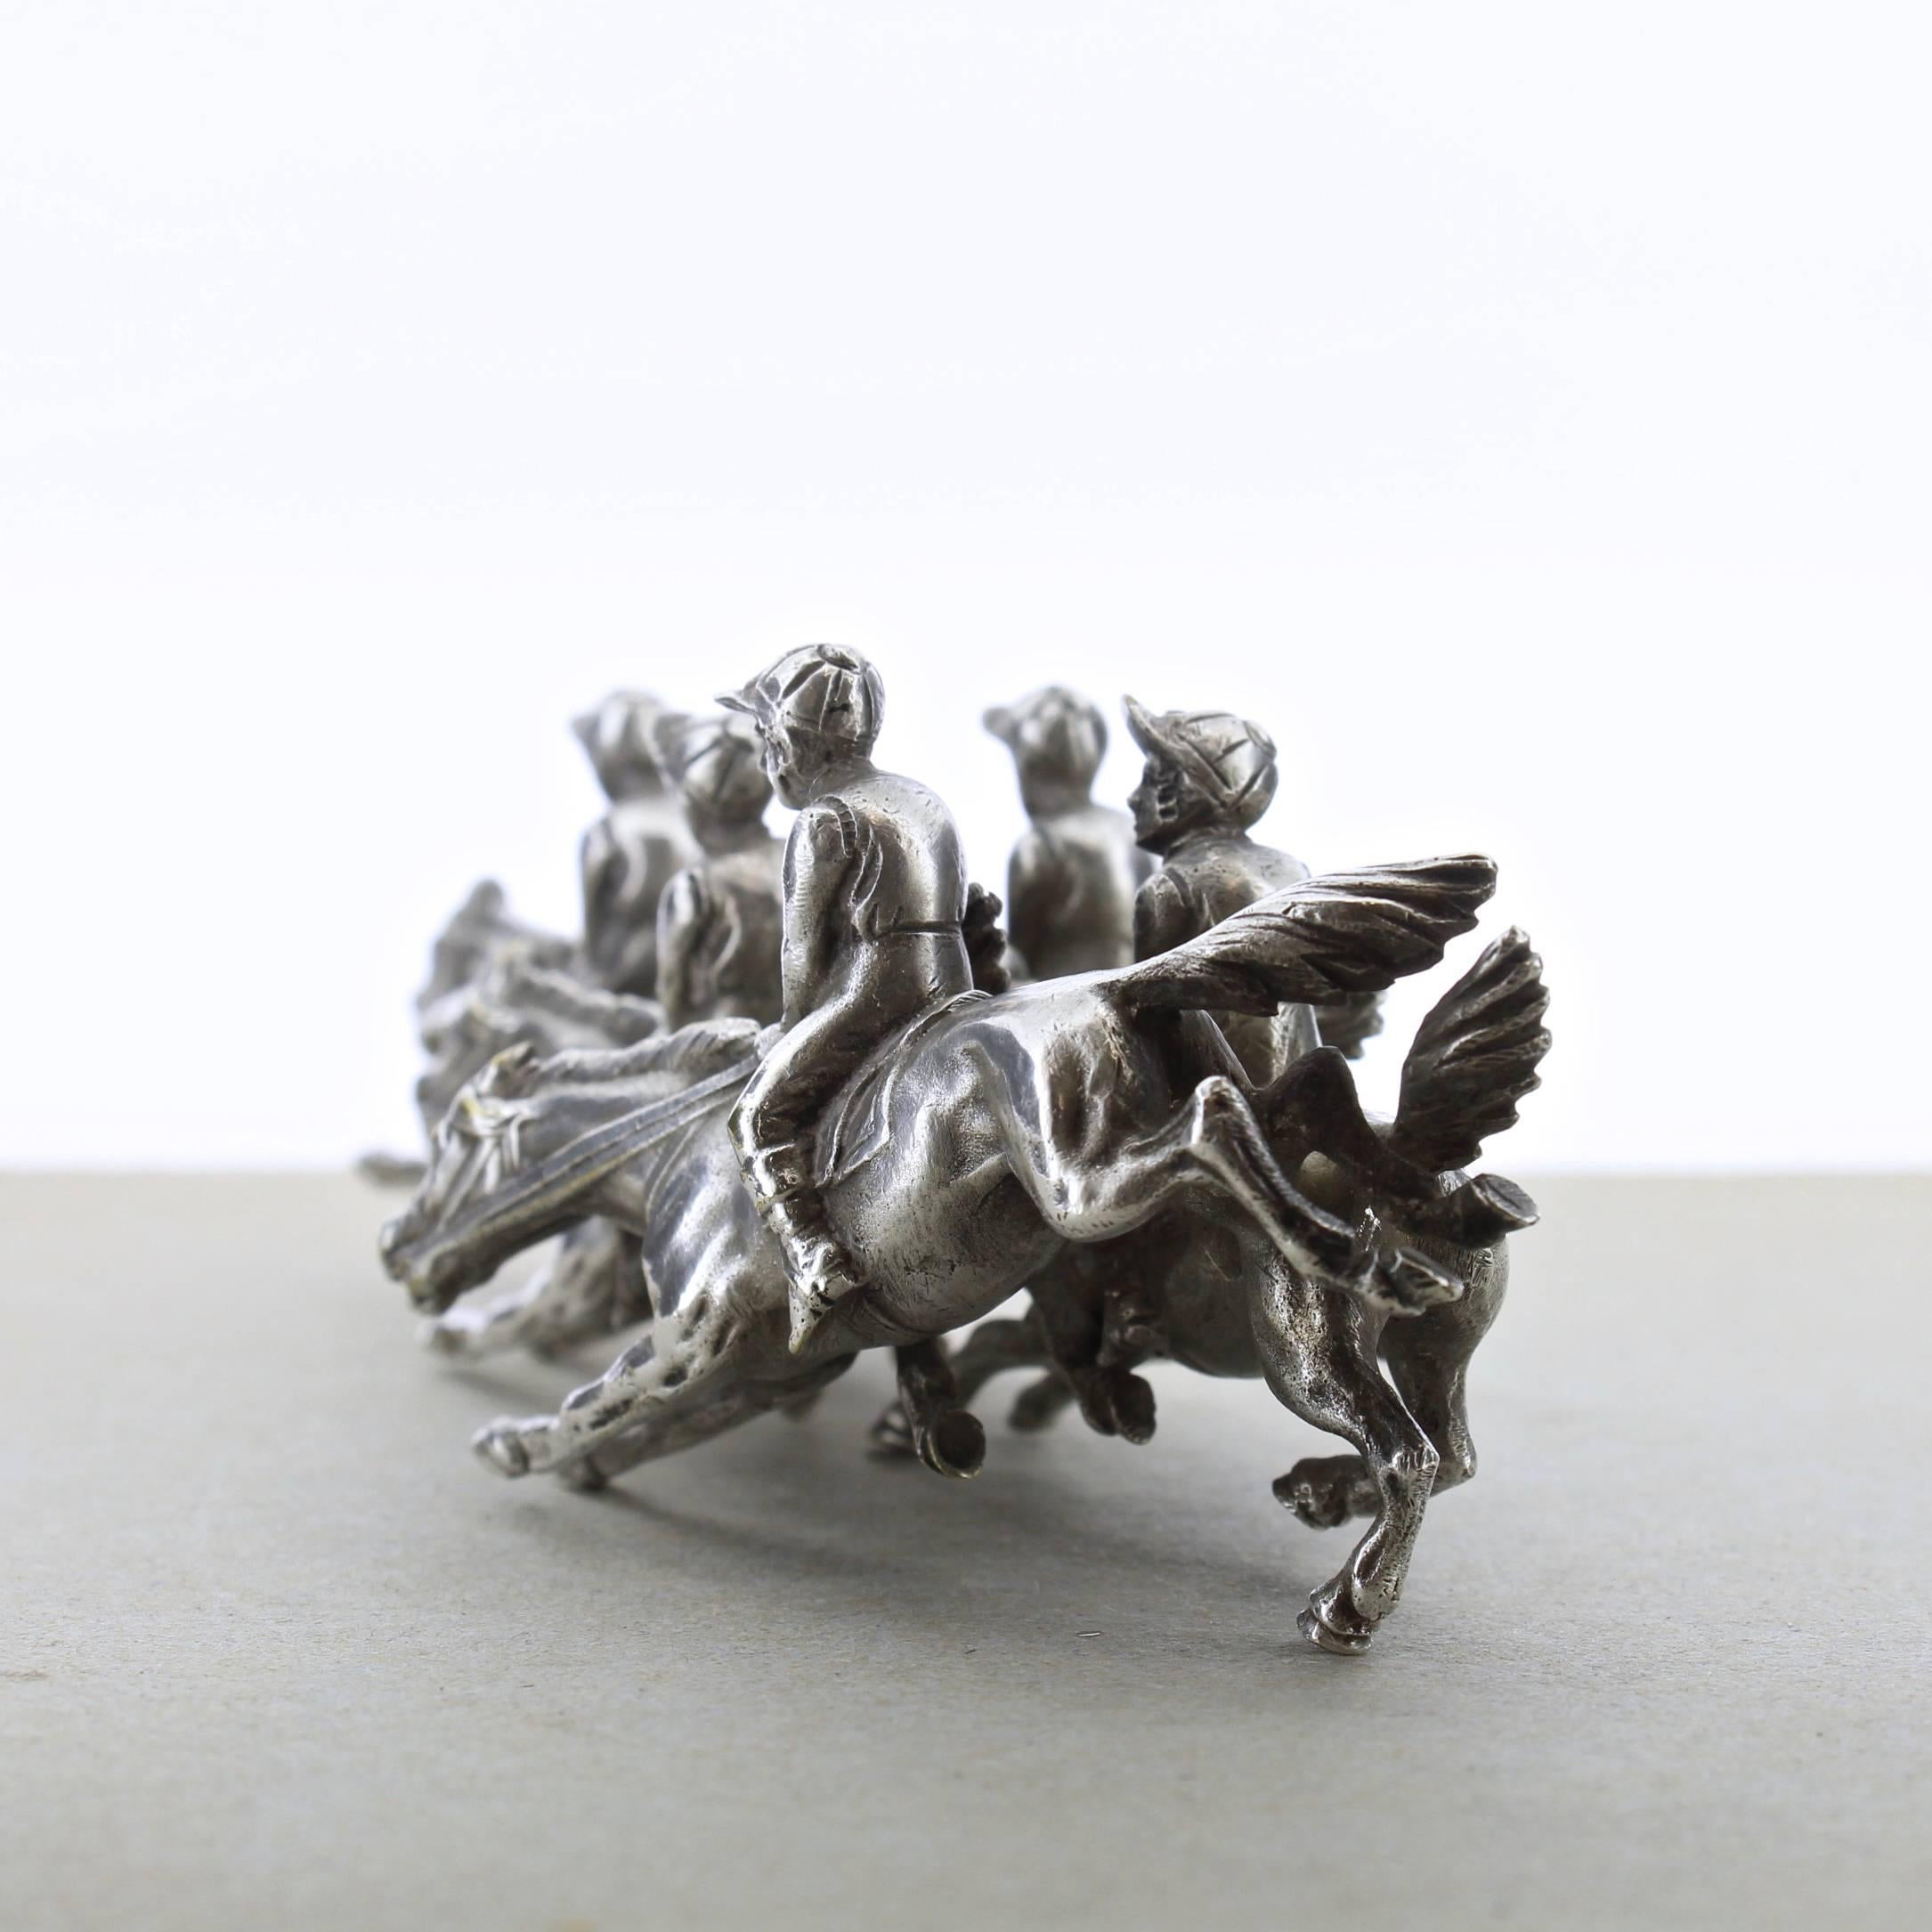 American Fine Vintage Silverplate Miniature Horse Racing Sculpture with Jockeys & Horses